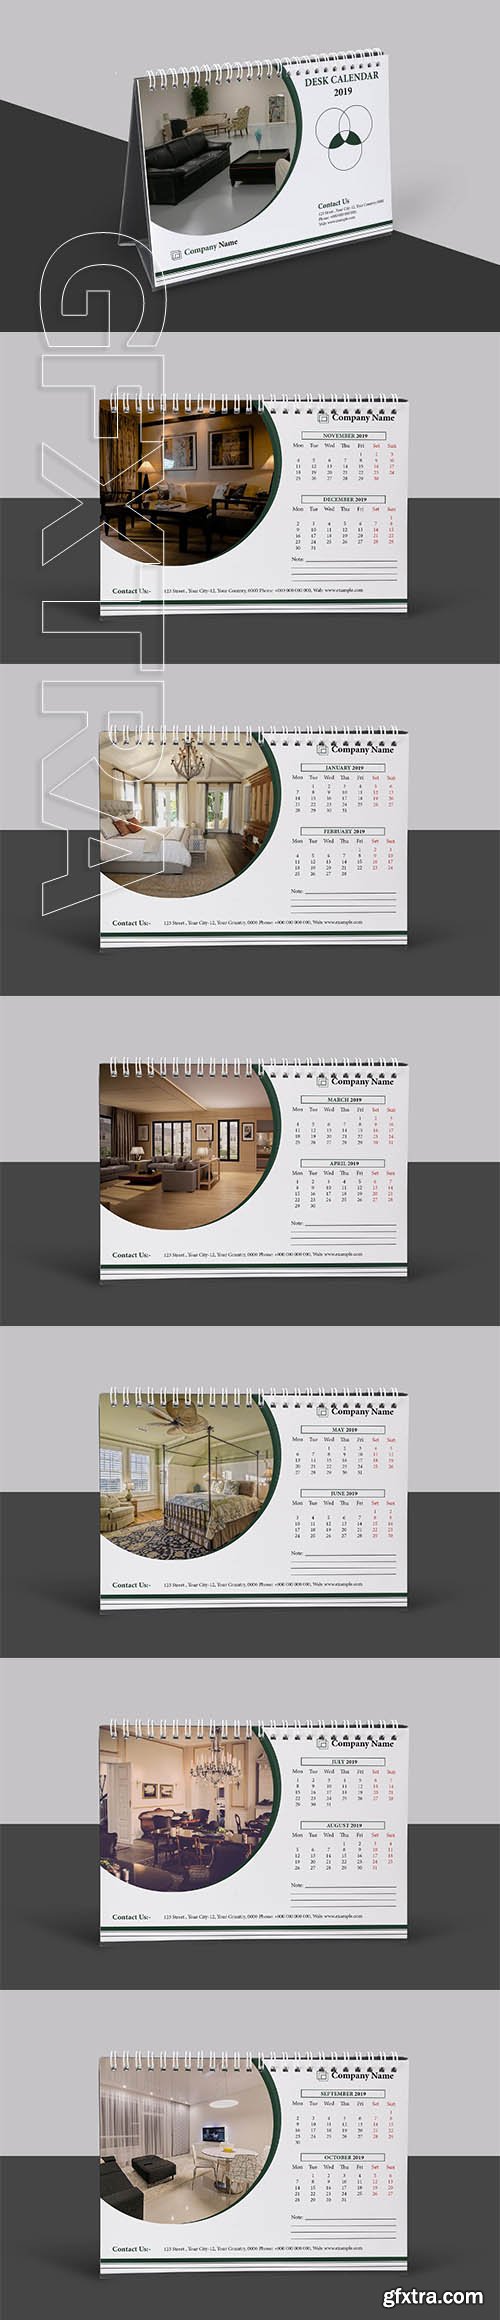 CreativeMarket - Desk Calendar 2019 3206969